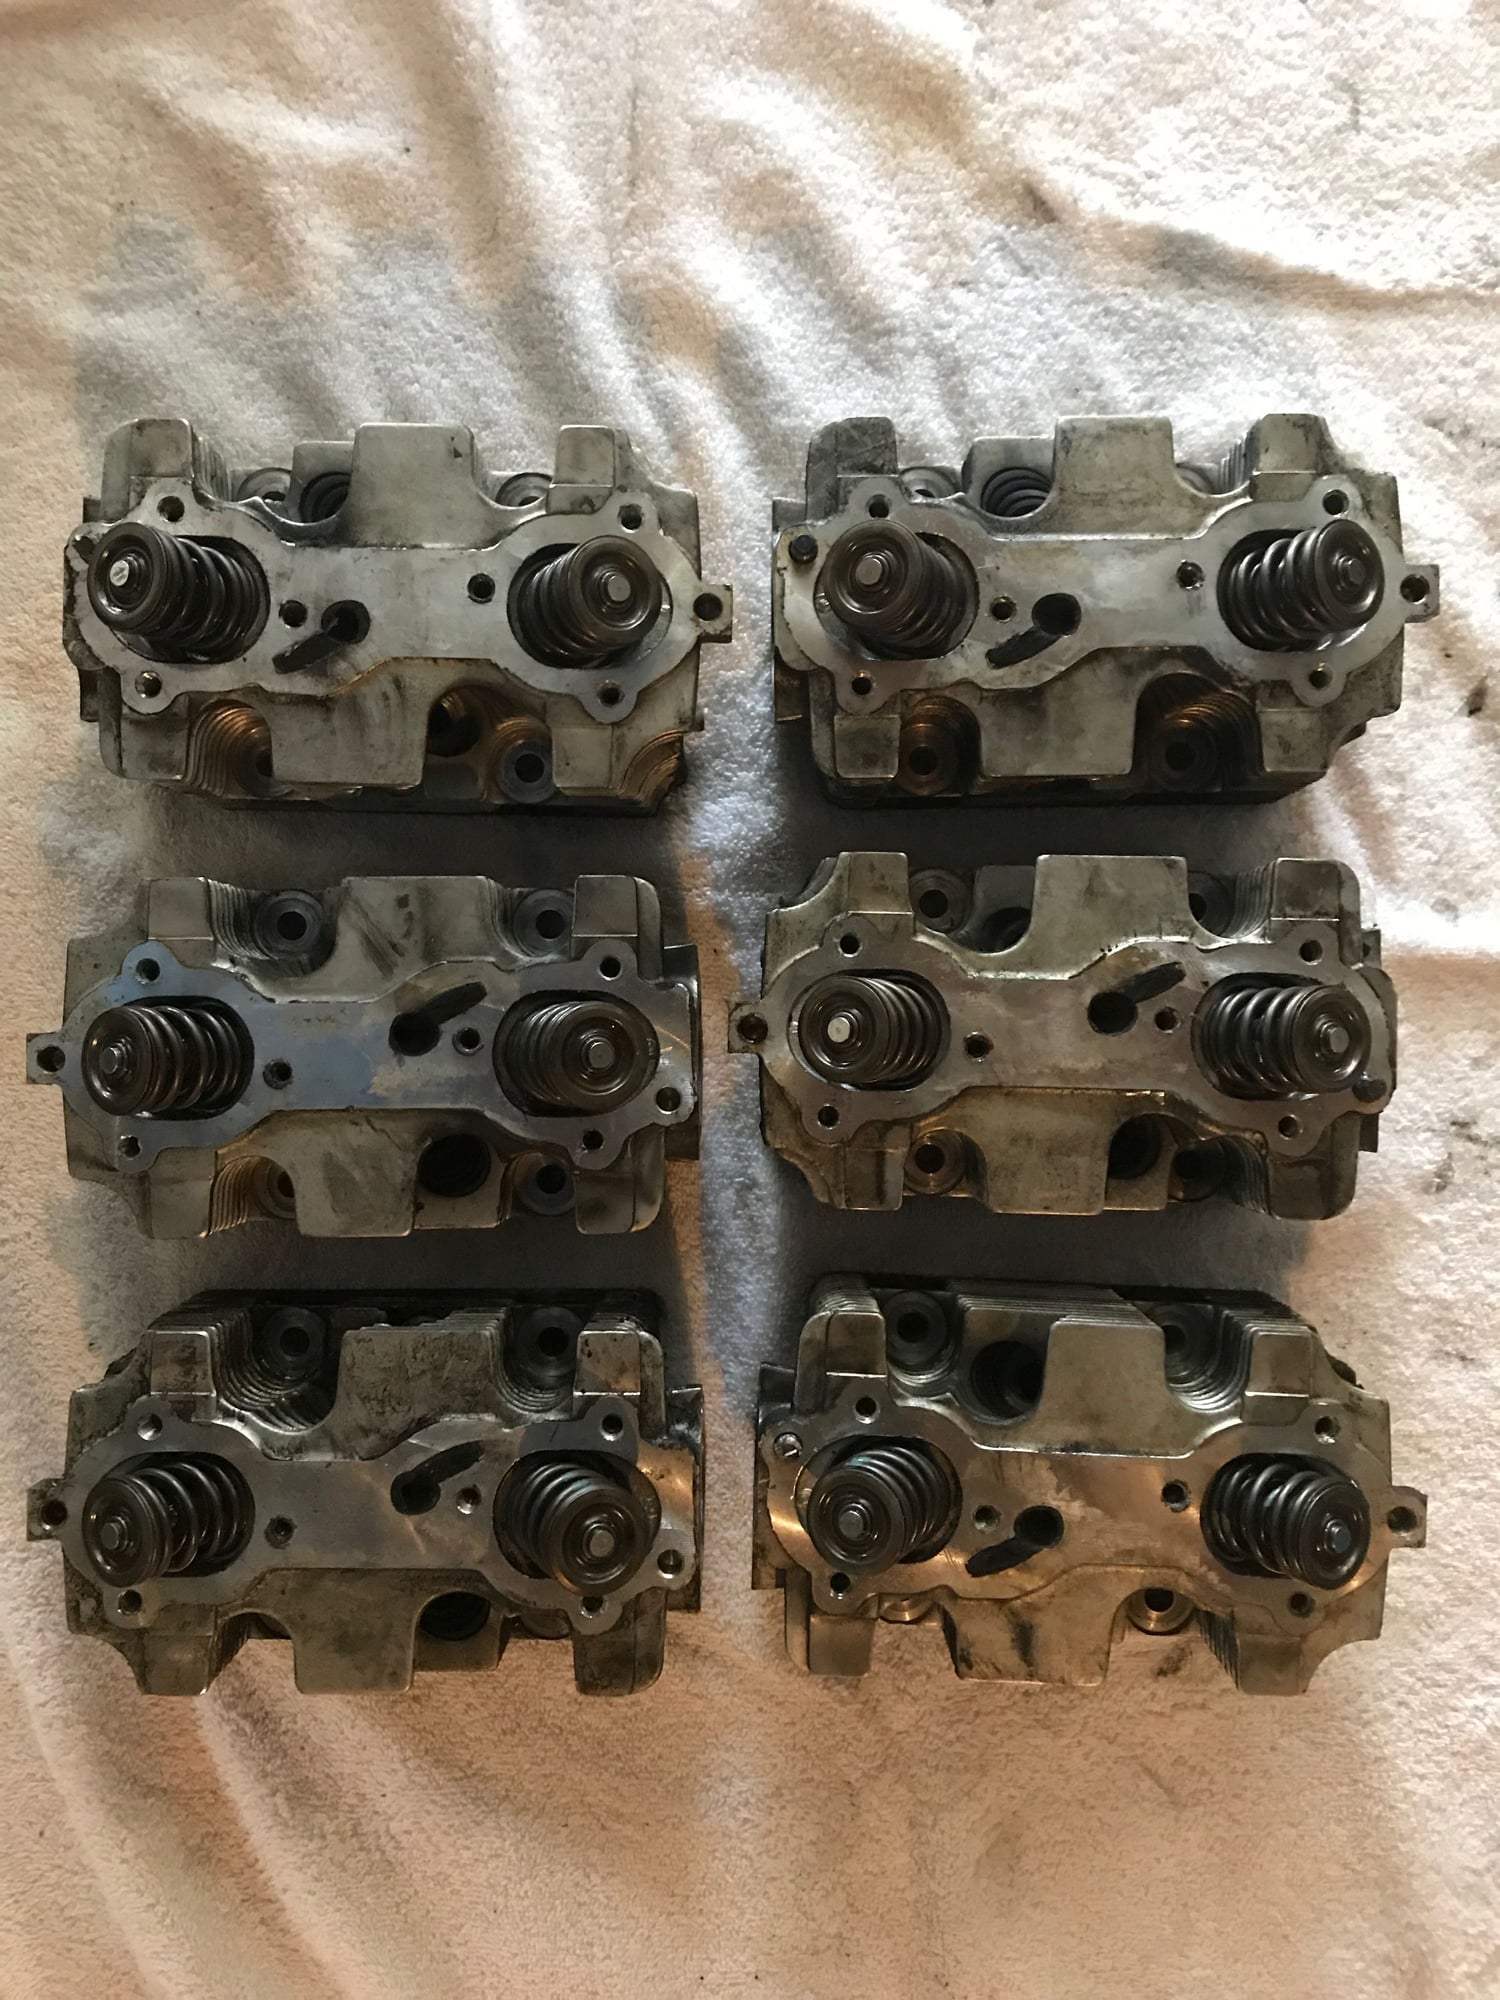 Engine - Internals - GARAGE SALE: Aluminum Trailer, 993 Engine Parts, Fikse wheels suspension parts etc!!! - Used - 1981 to 1998 Porsche 911 - Birmingham, AL 35226, United States